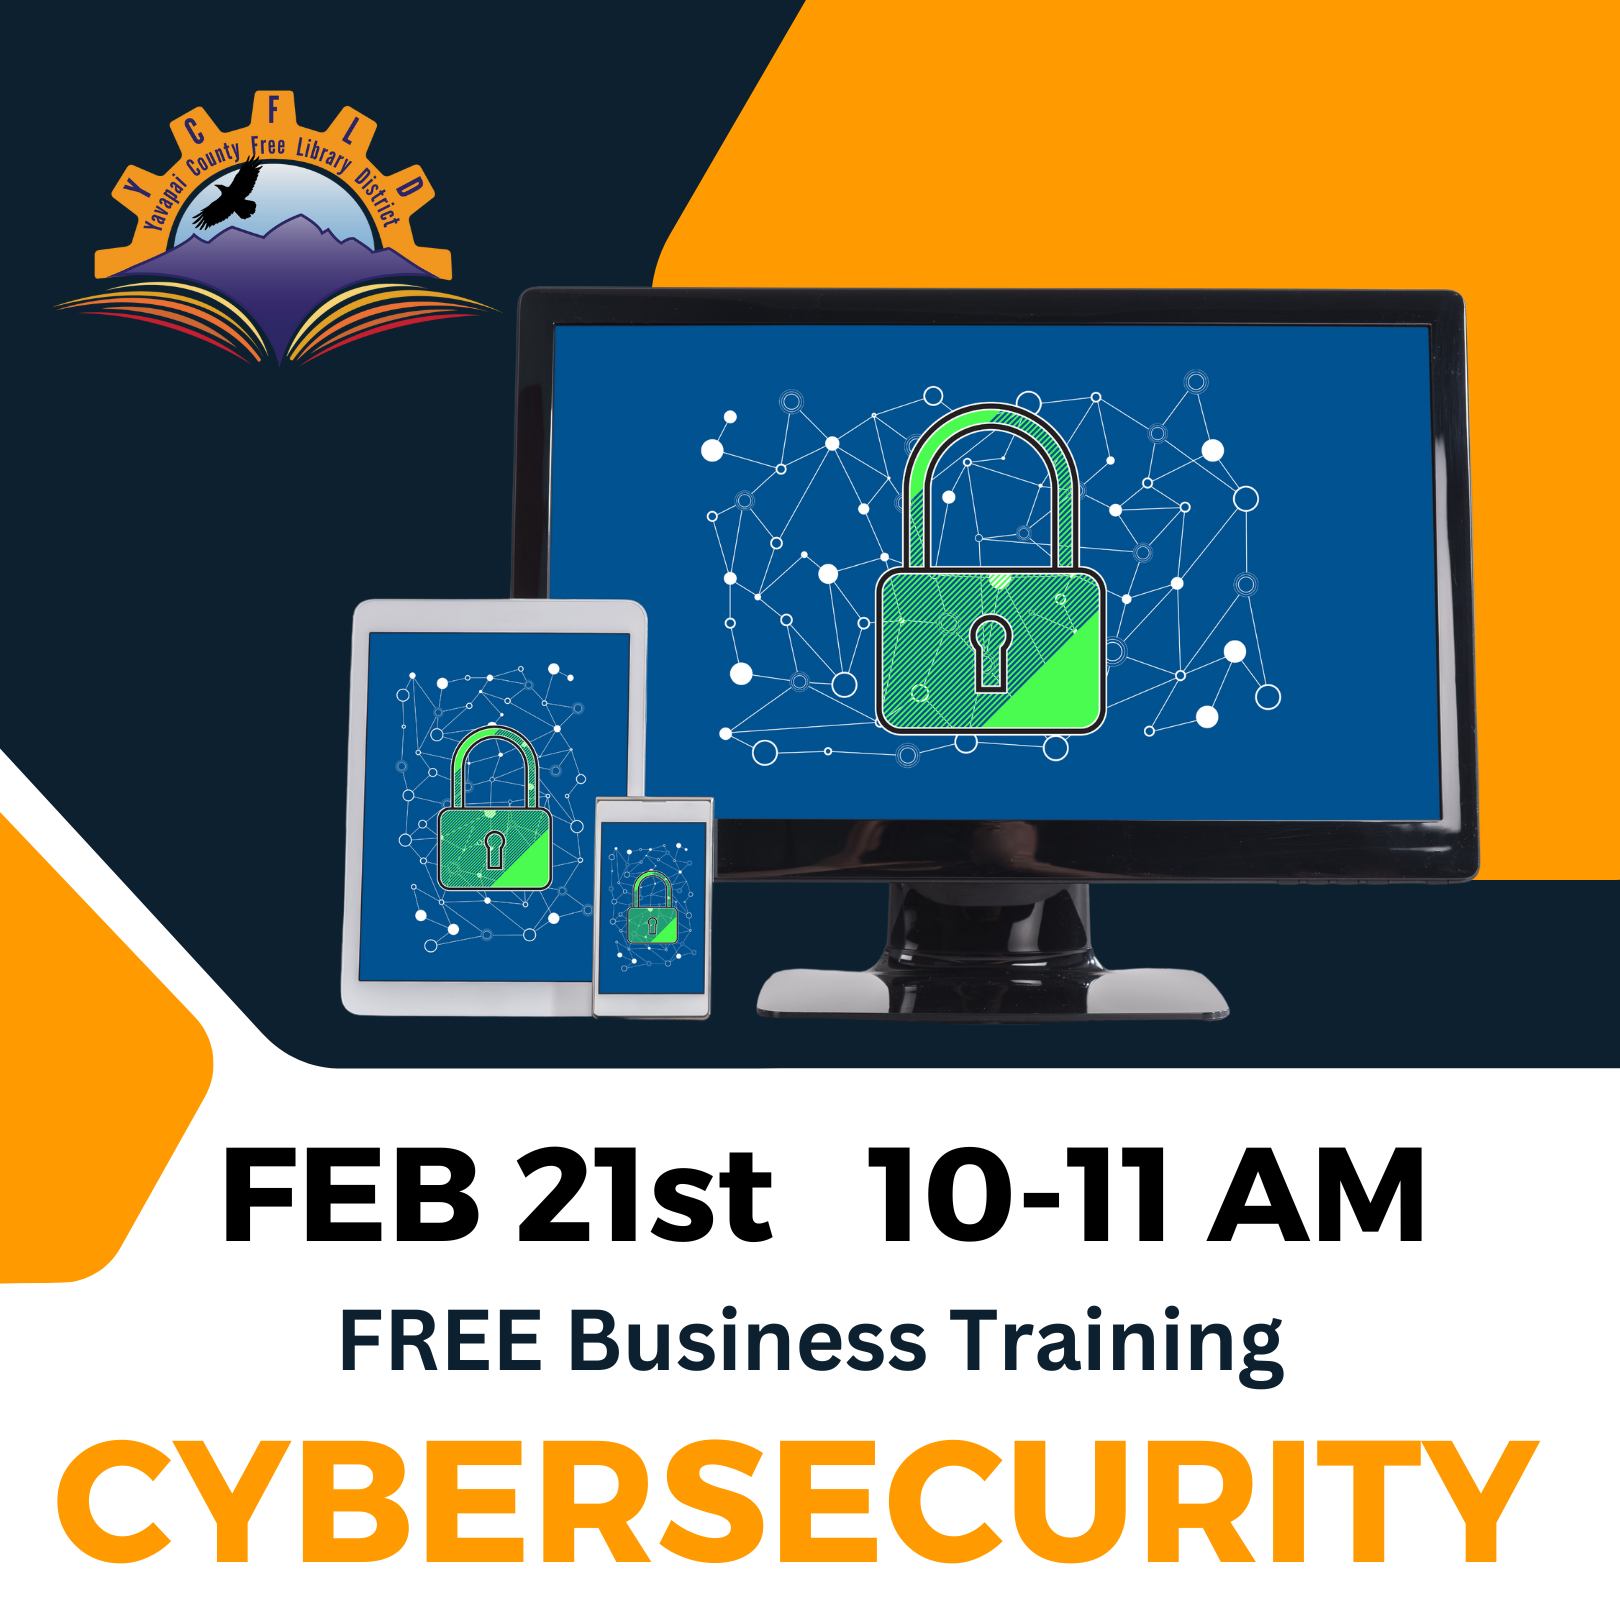 Cybersecurity Training Feb 21